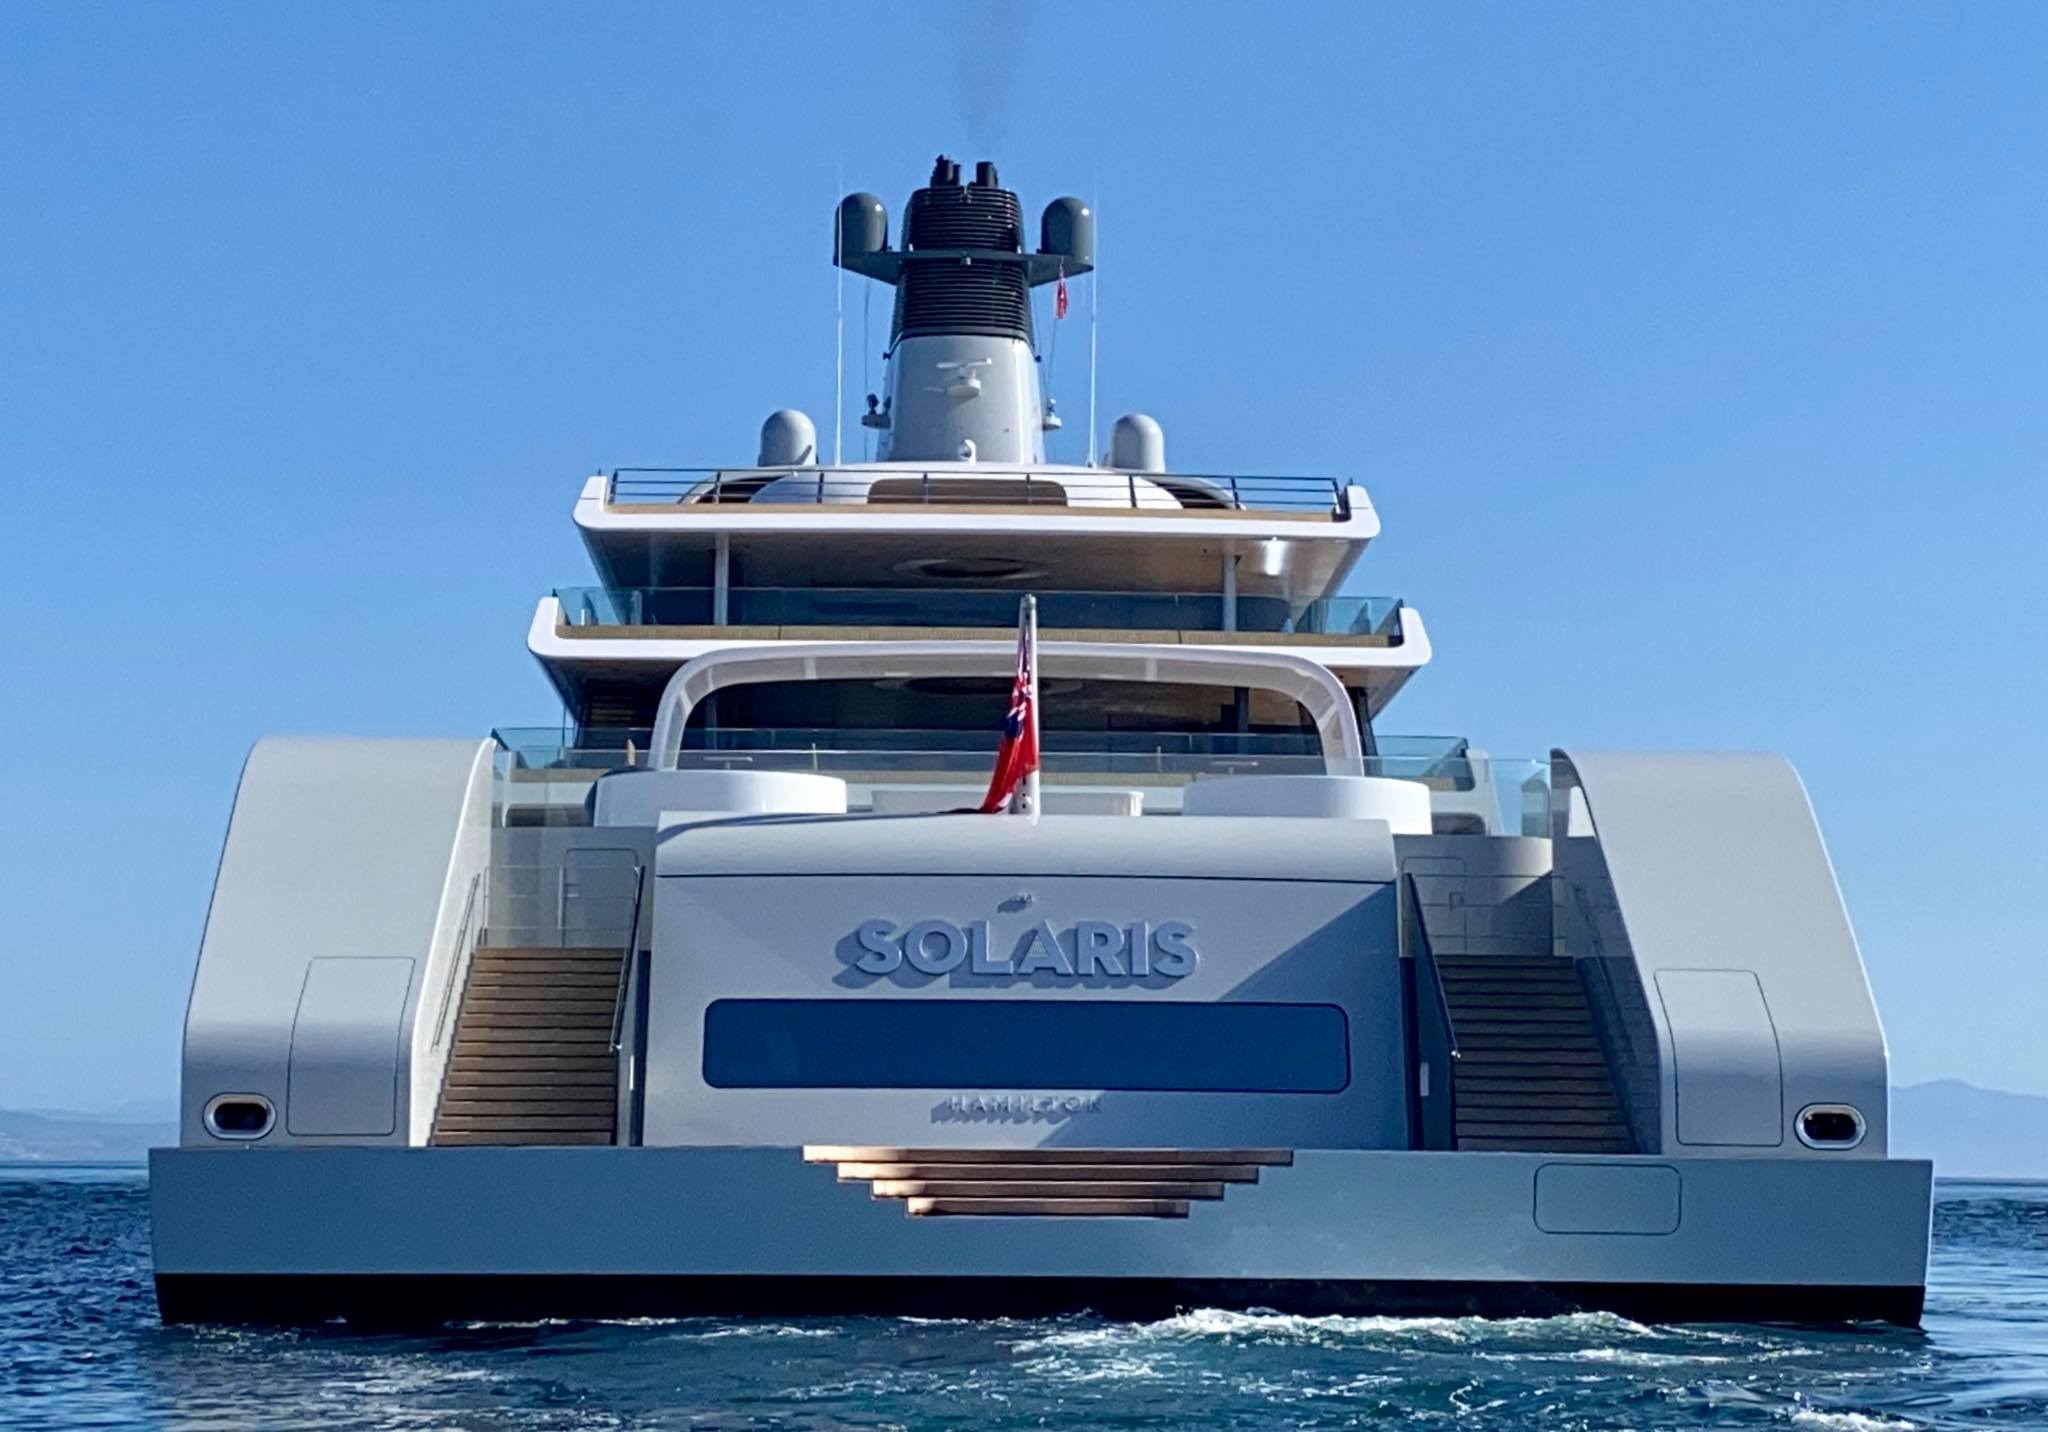 SOLARIS Yacht - Lloyd Werft  - 2021 - propriétaire Roman Abramovich